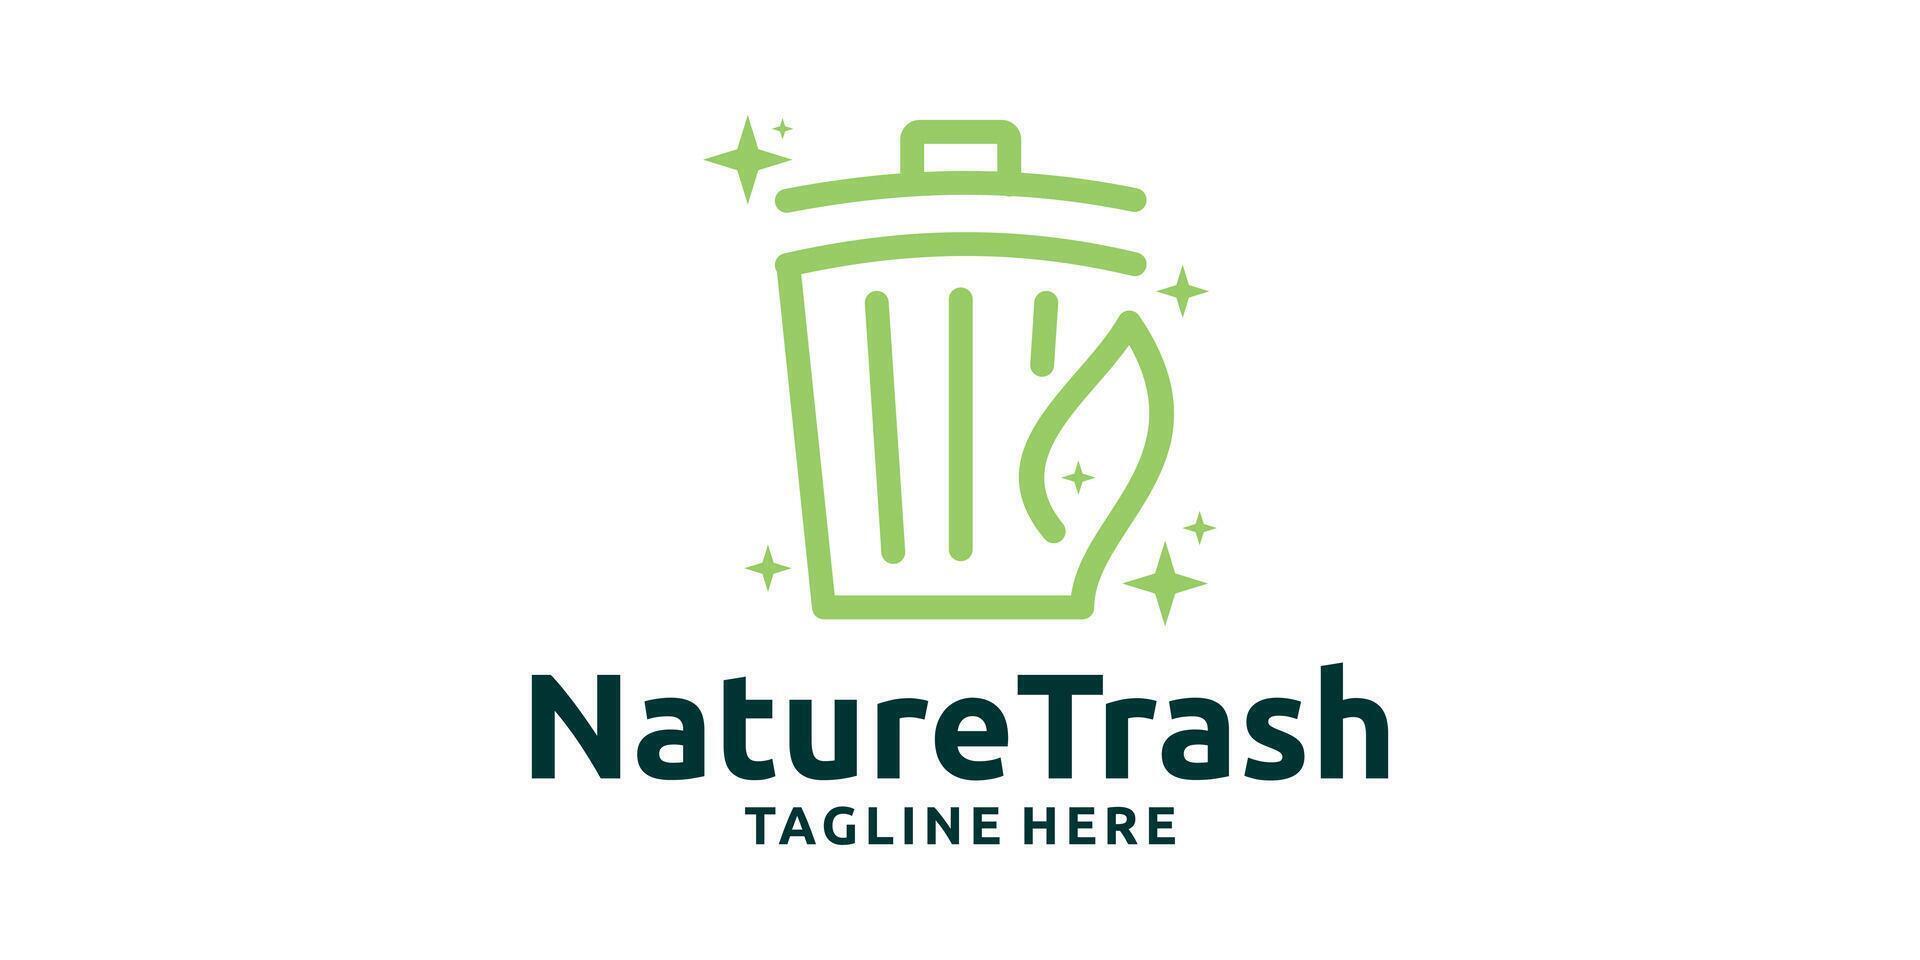 logo design organic trash, natural trash, logo design template, creative idea symbol. vector